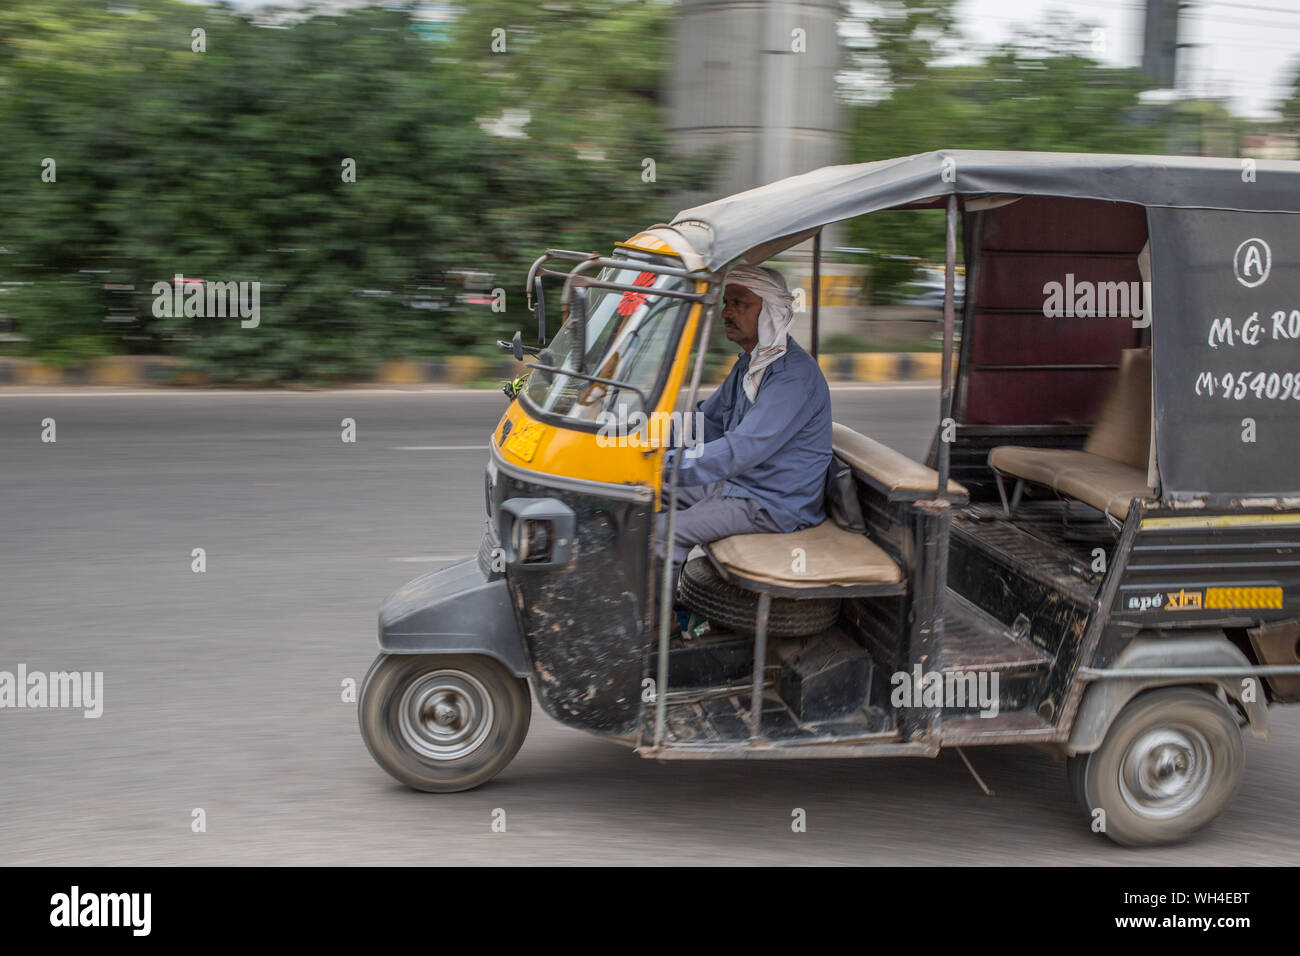 A rickshaw speeding down a road in Gurgaon, India. Stock Photo